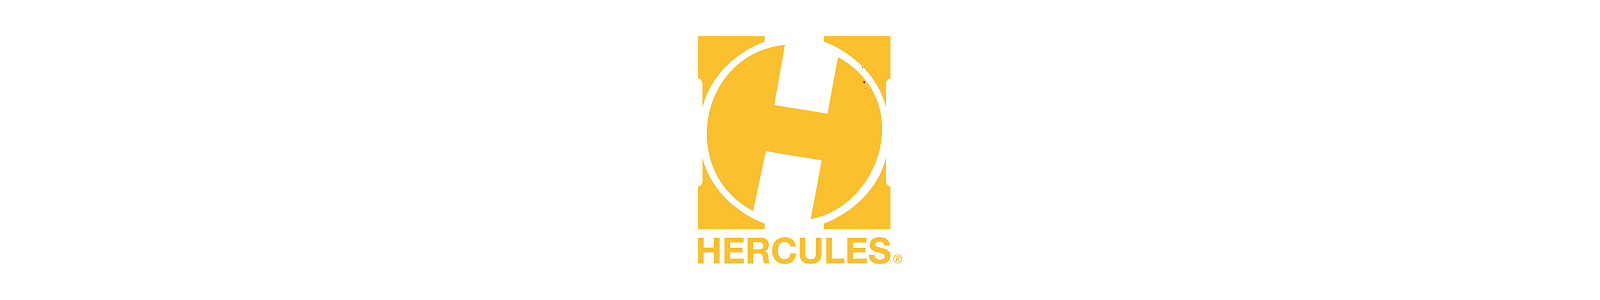 Hercules Yellow Logo Landing Header